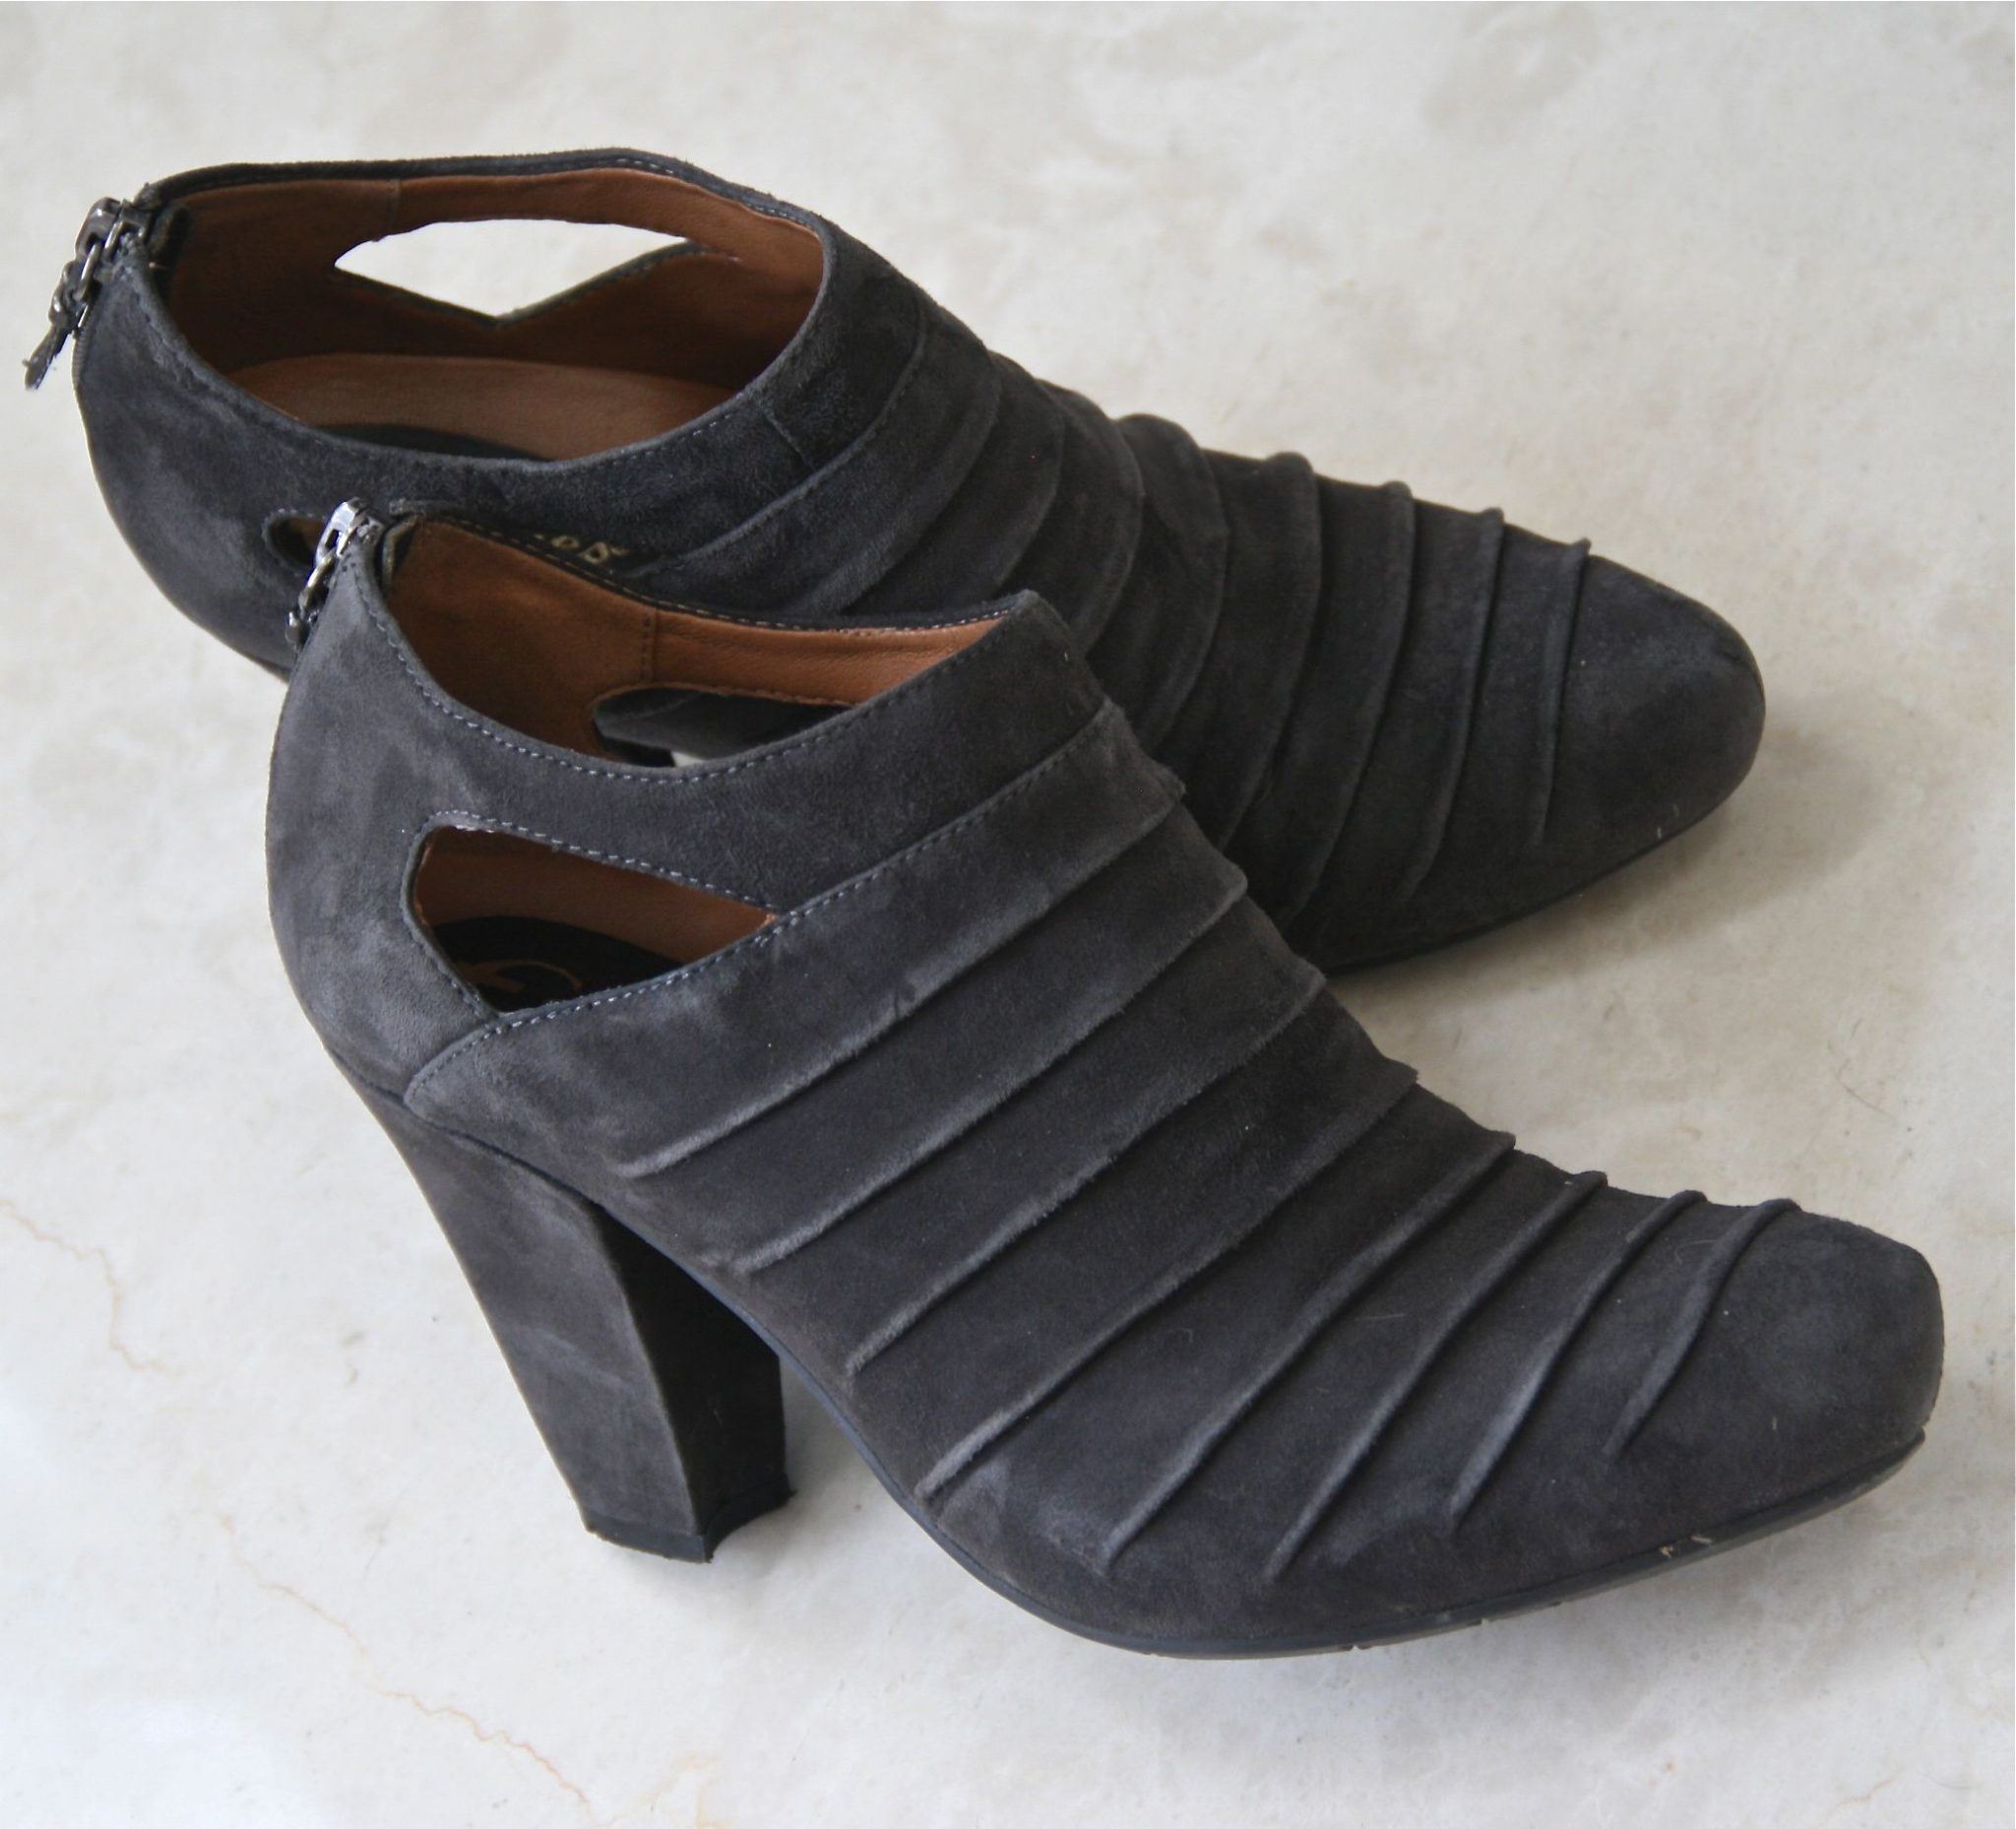 Earthies shoes, comfortable high heel shoes